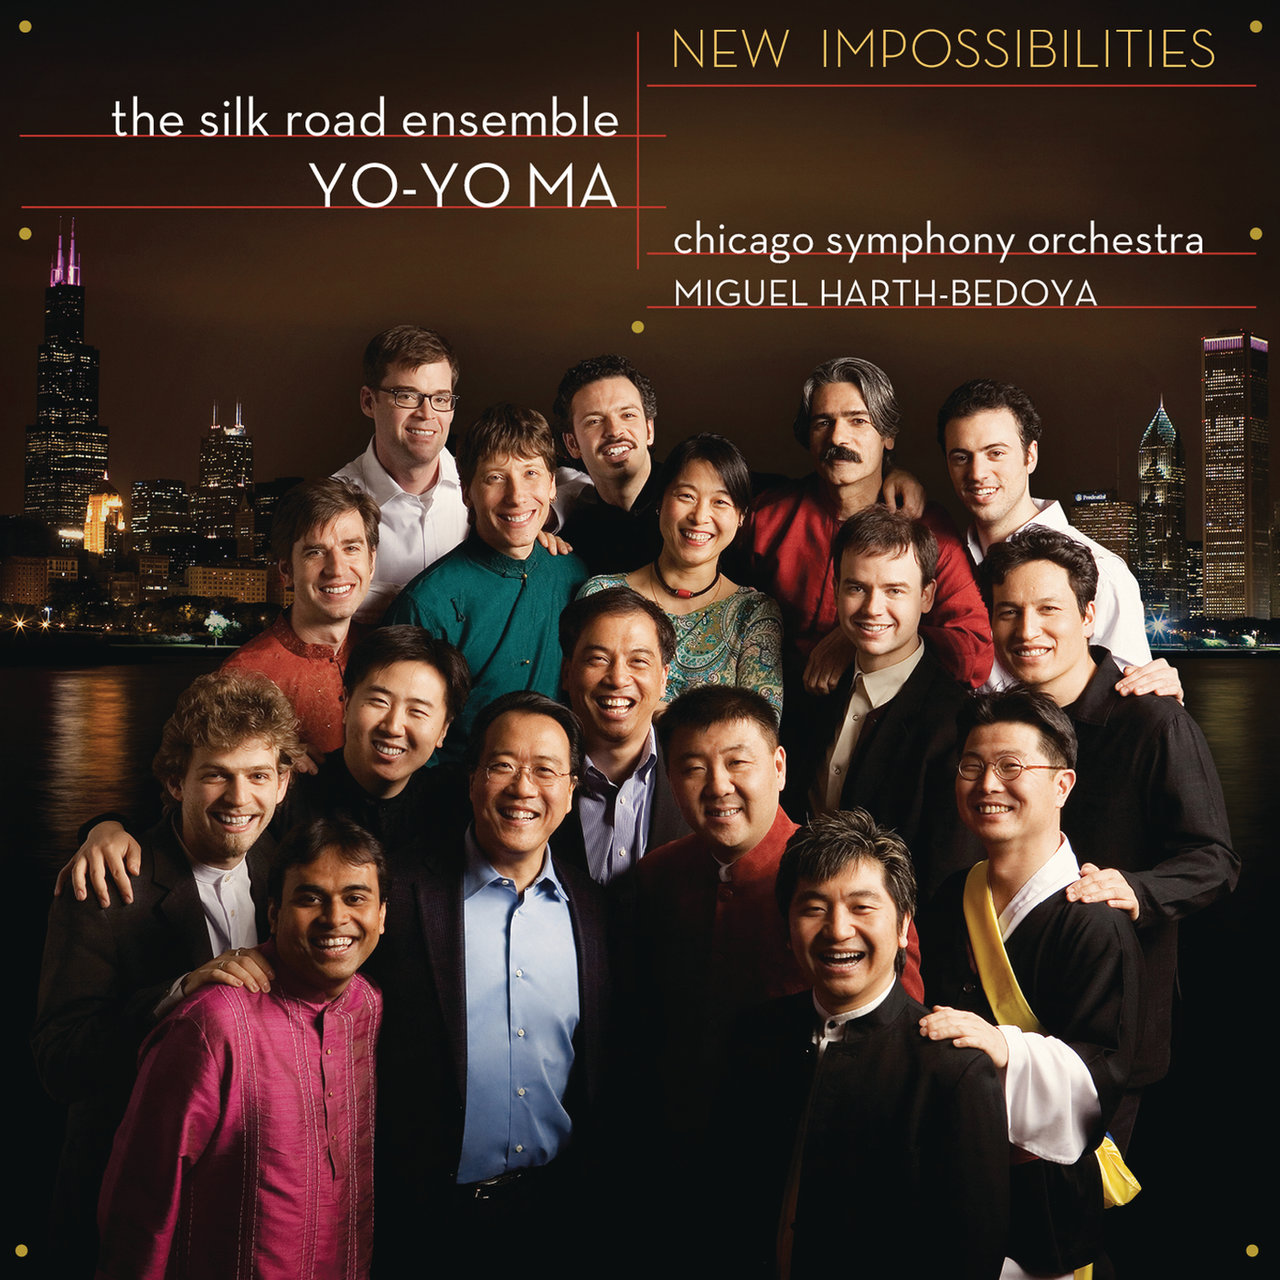 Yo-Yo Ma, Silkroad Ensemble - New Impossibilities ((Remastered)) [2007]